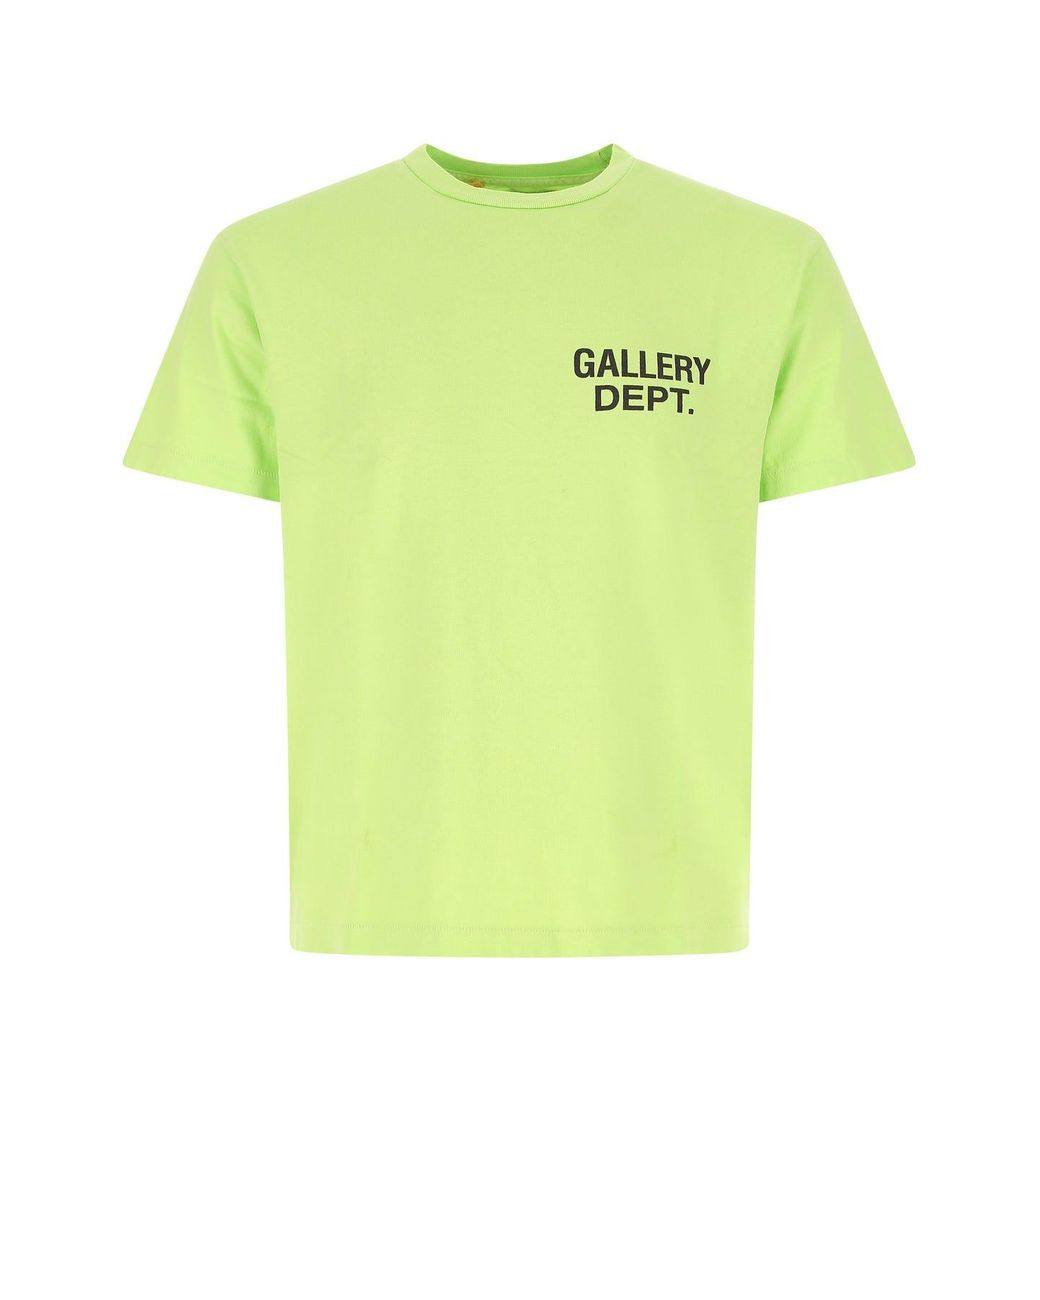 GALLERY DEPT. Acid Cotton T-shirt in Green for Men | Lyst